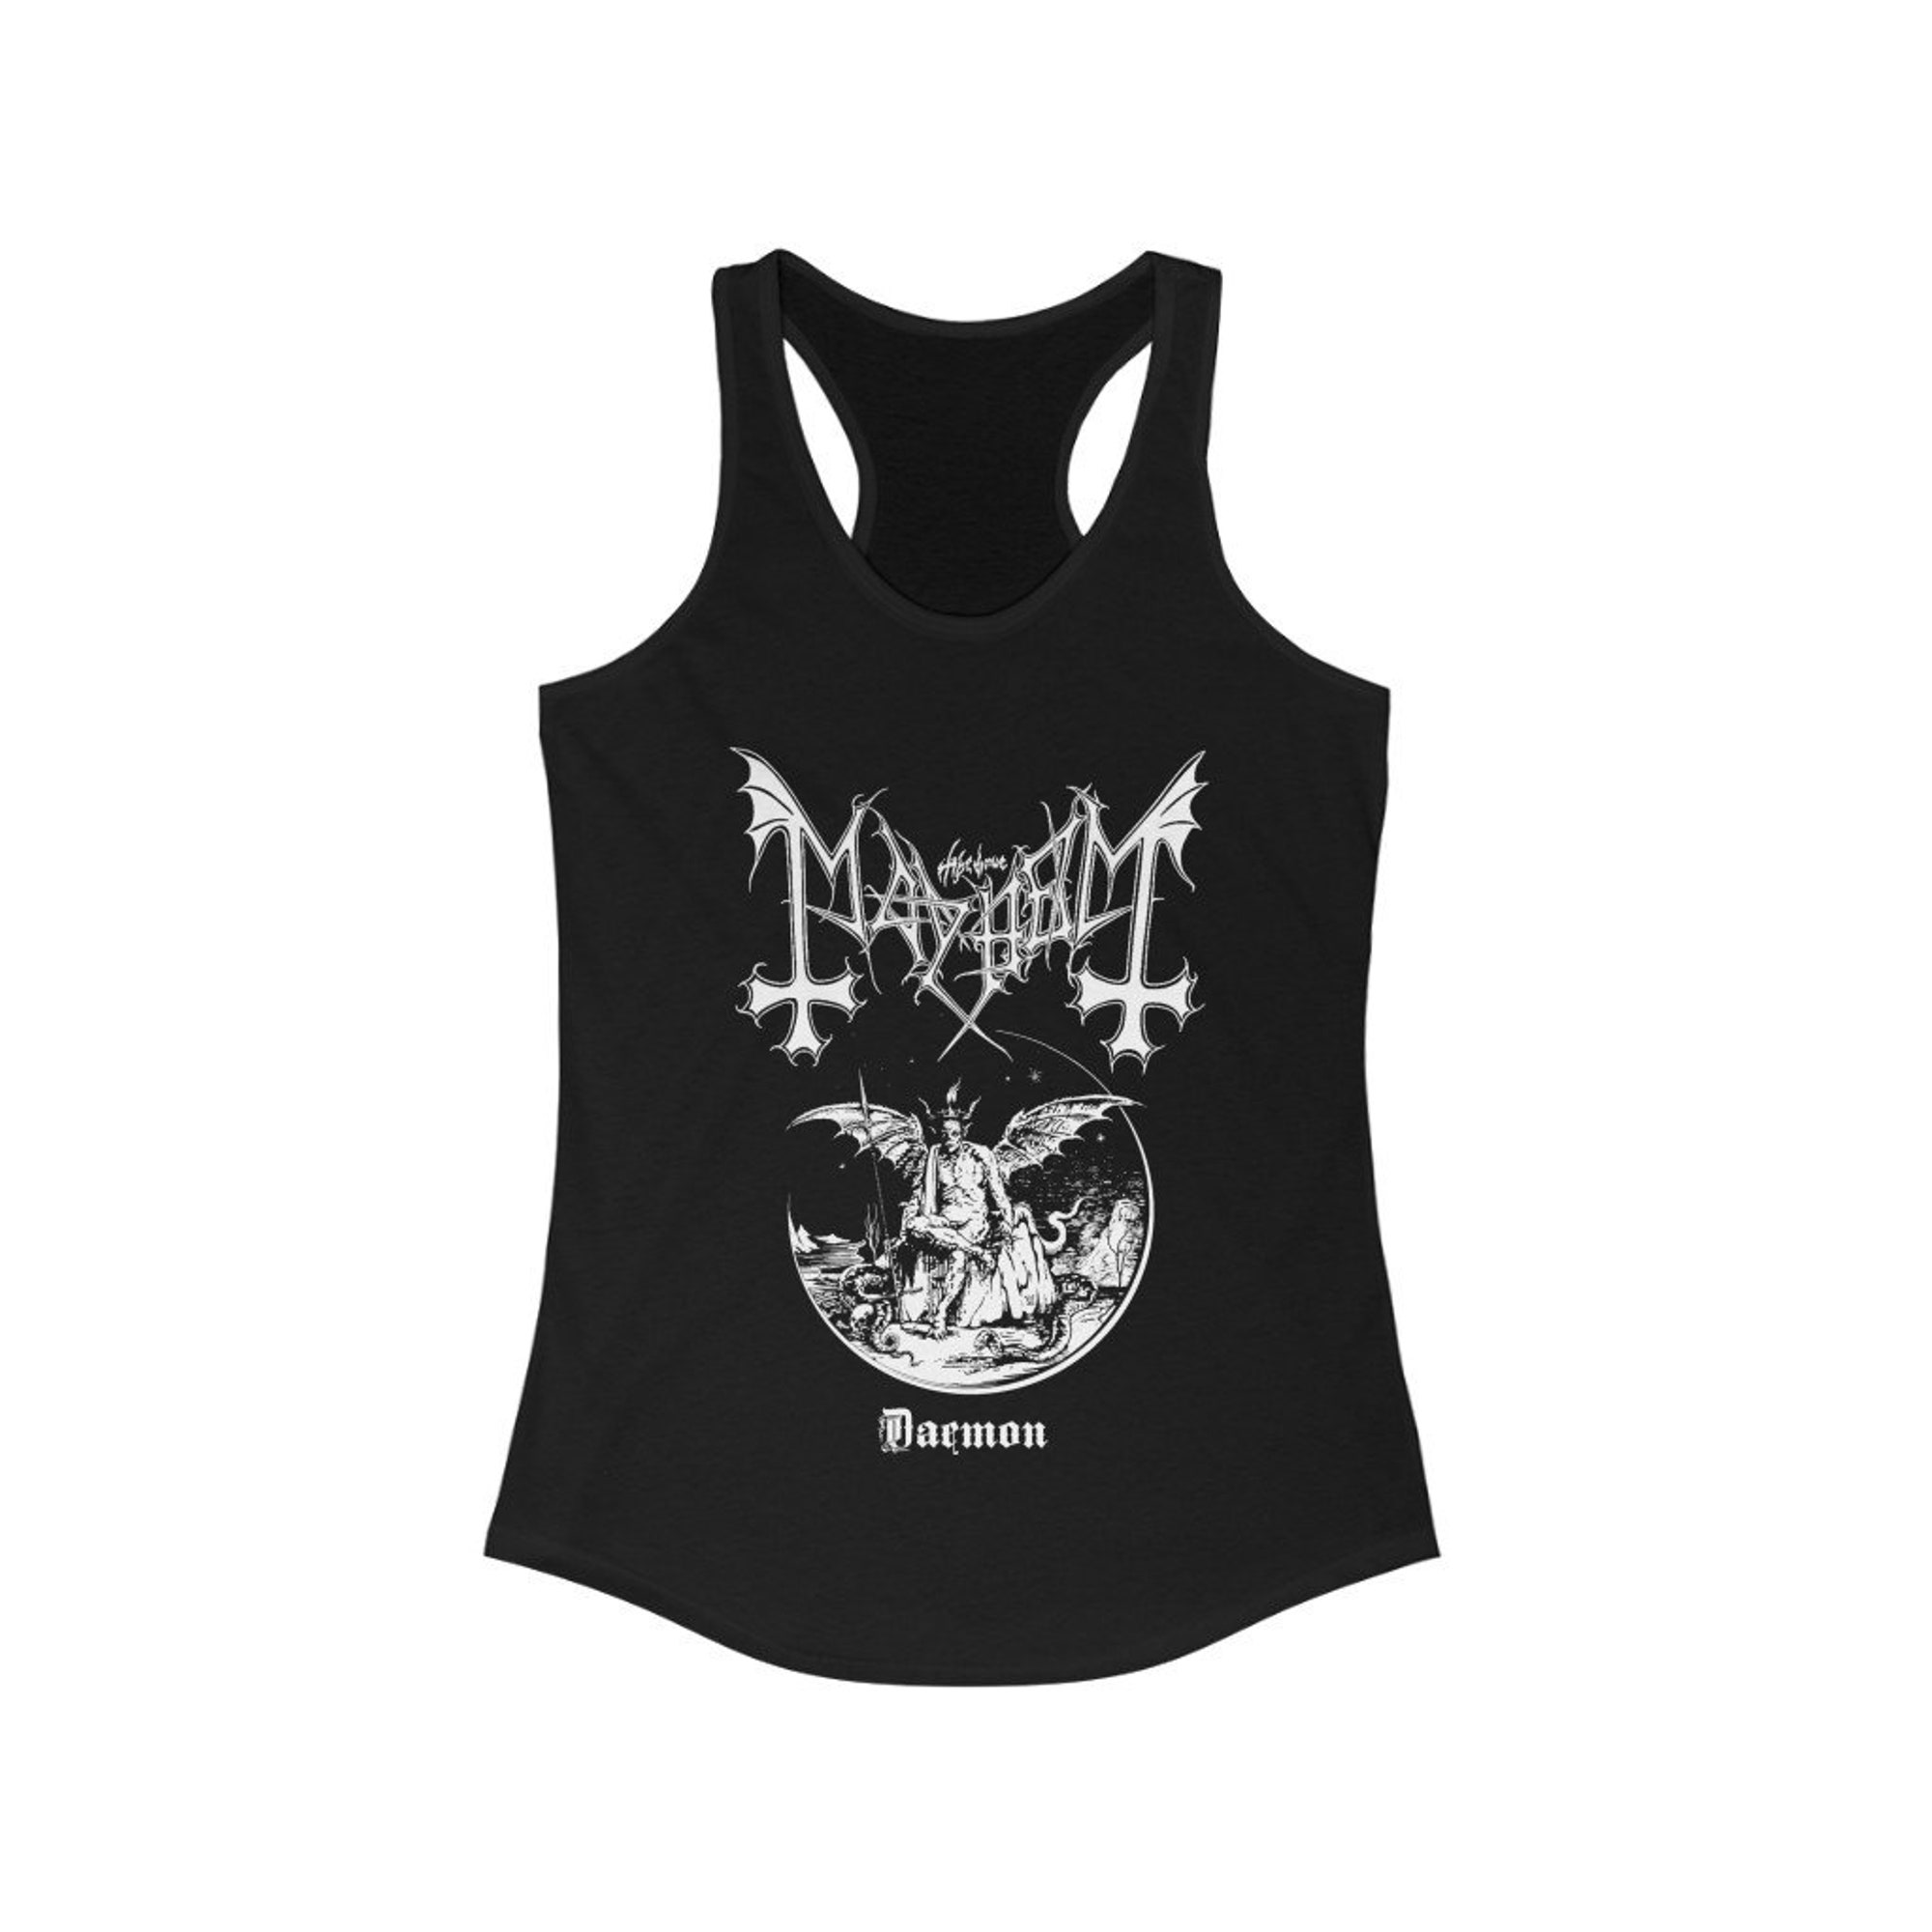 Discover Mayhem Womens Tank Top - Daemon Sleeveless Tee - Black Metal Band